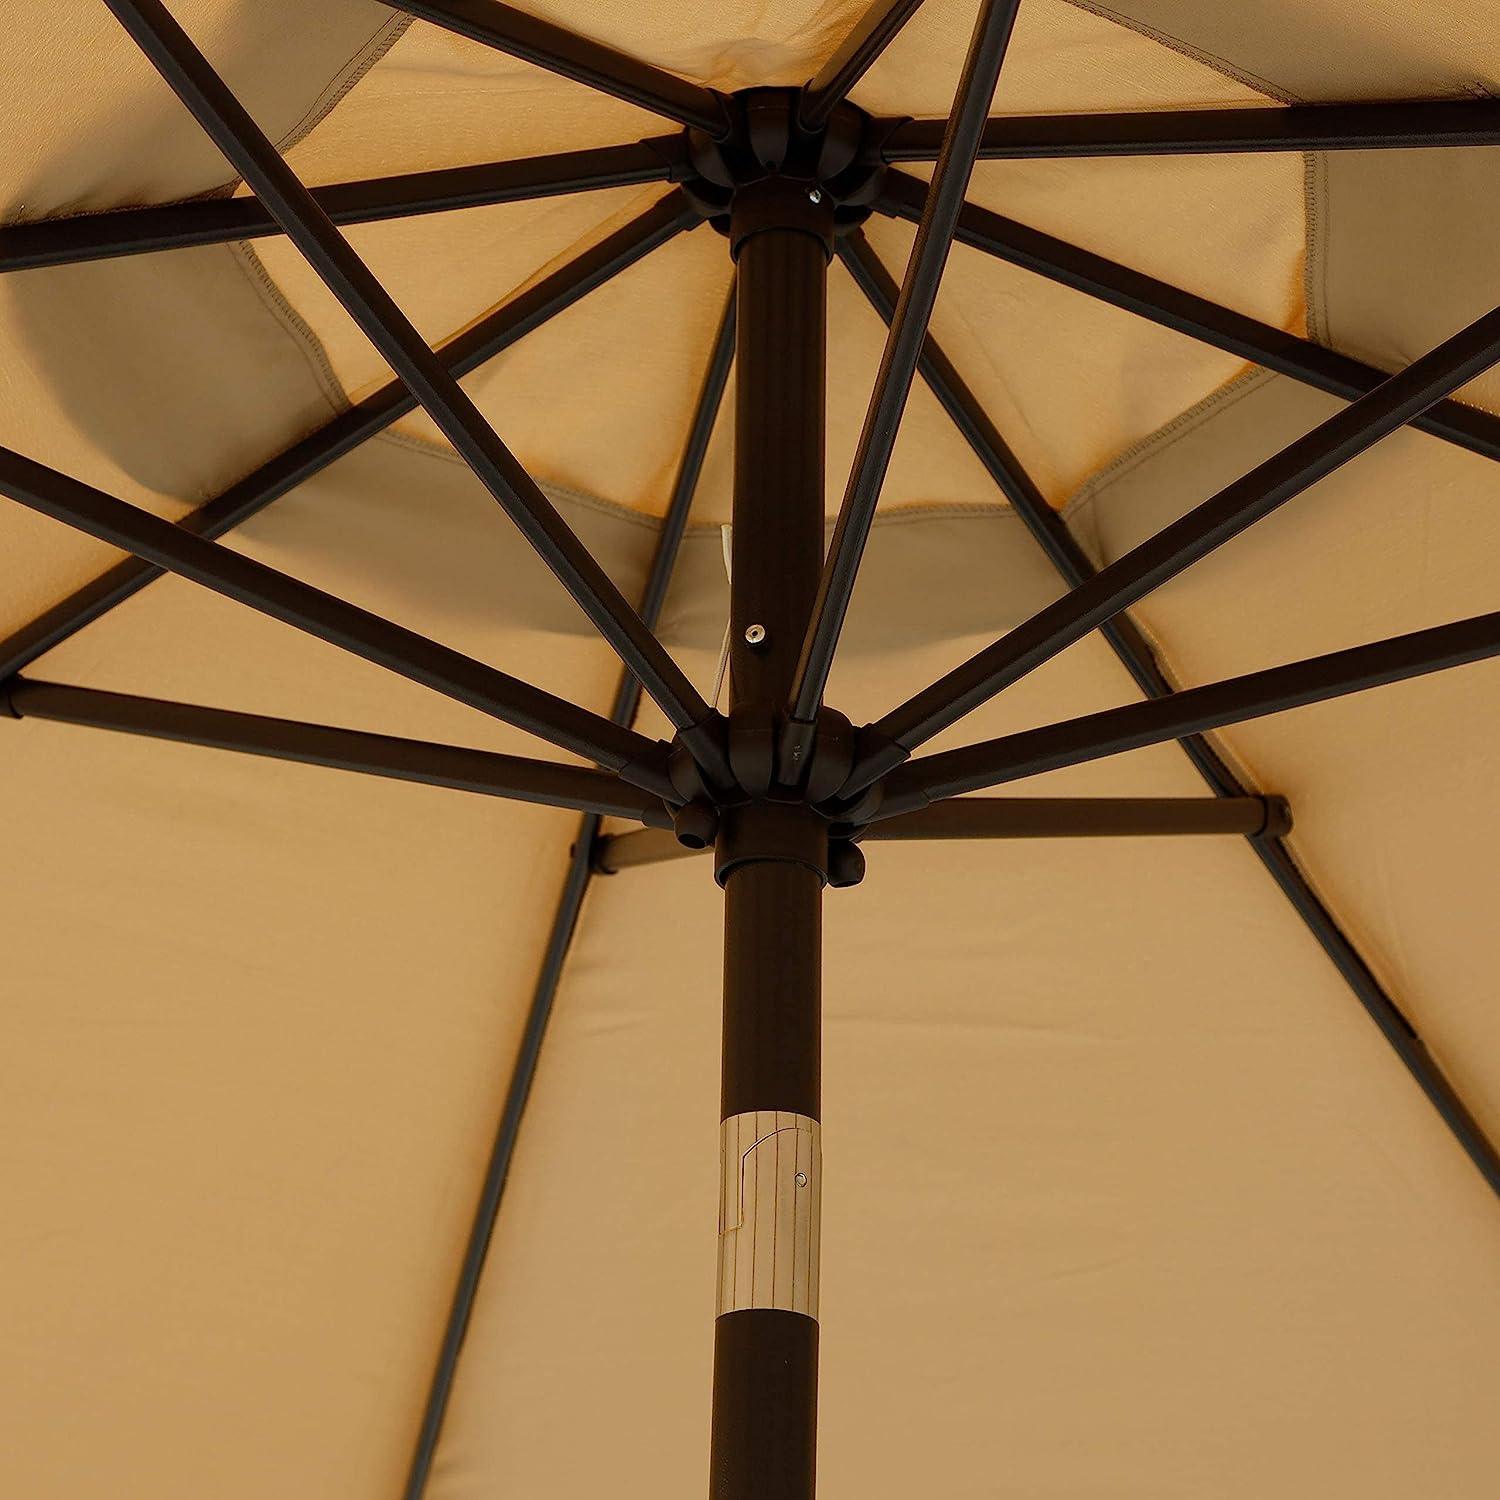 LazyRella™ 9' Outdoor Patio Umbrella with Push Button, Tilt & Crank, 8 Ribs - Lazy Pro